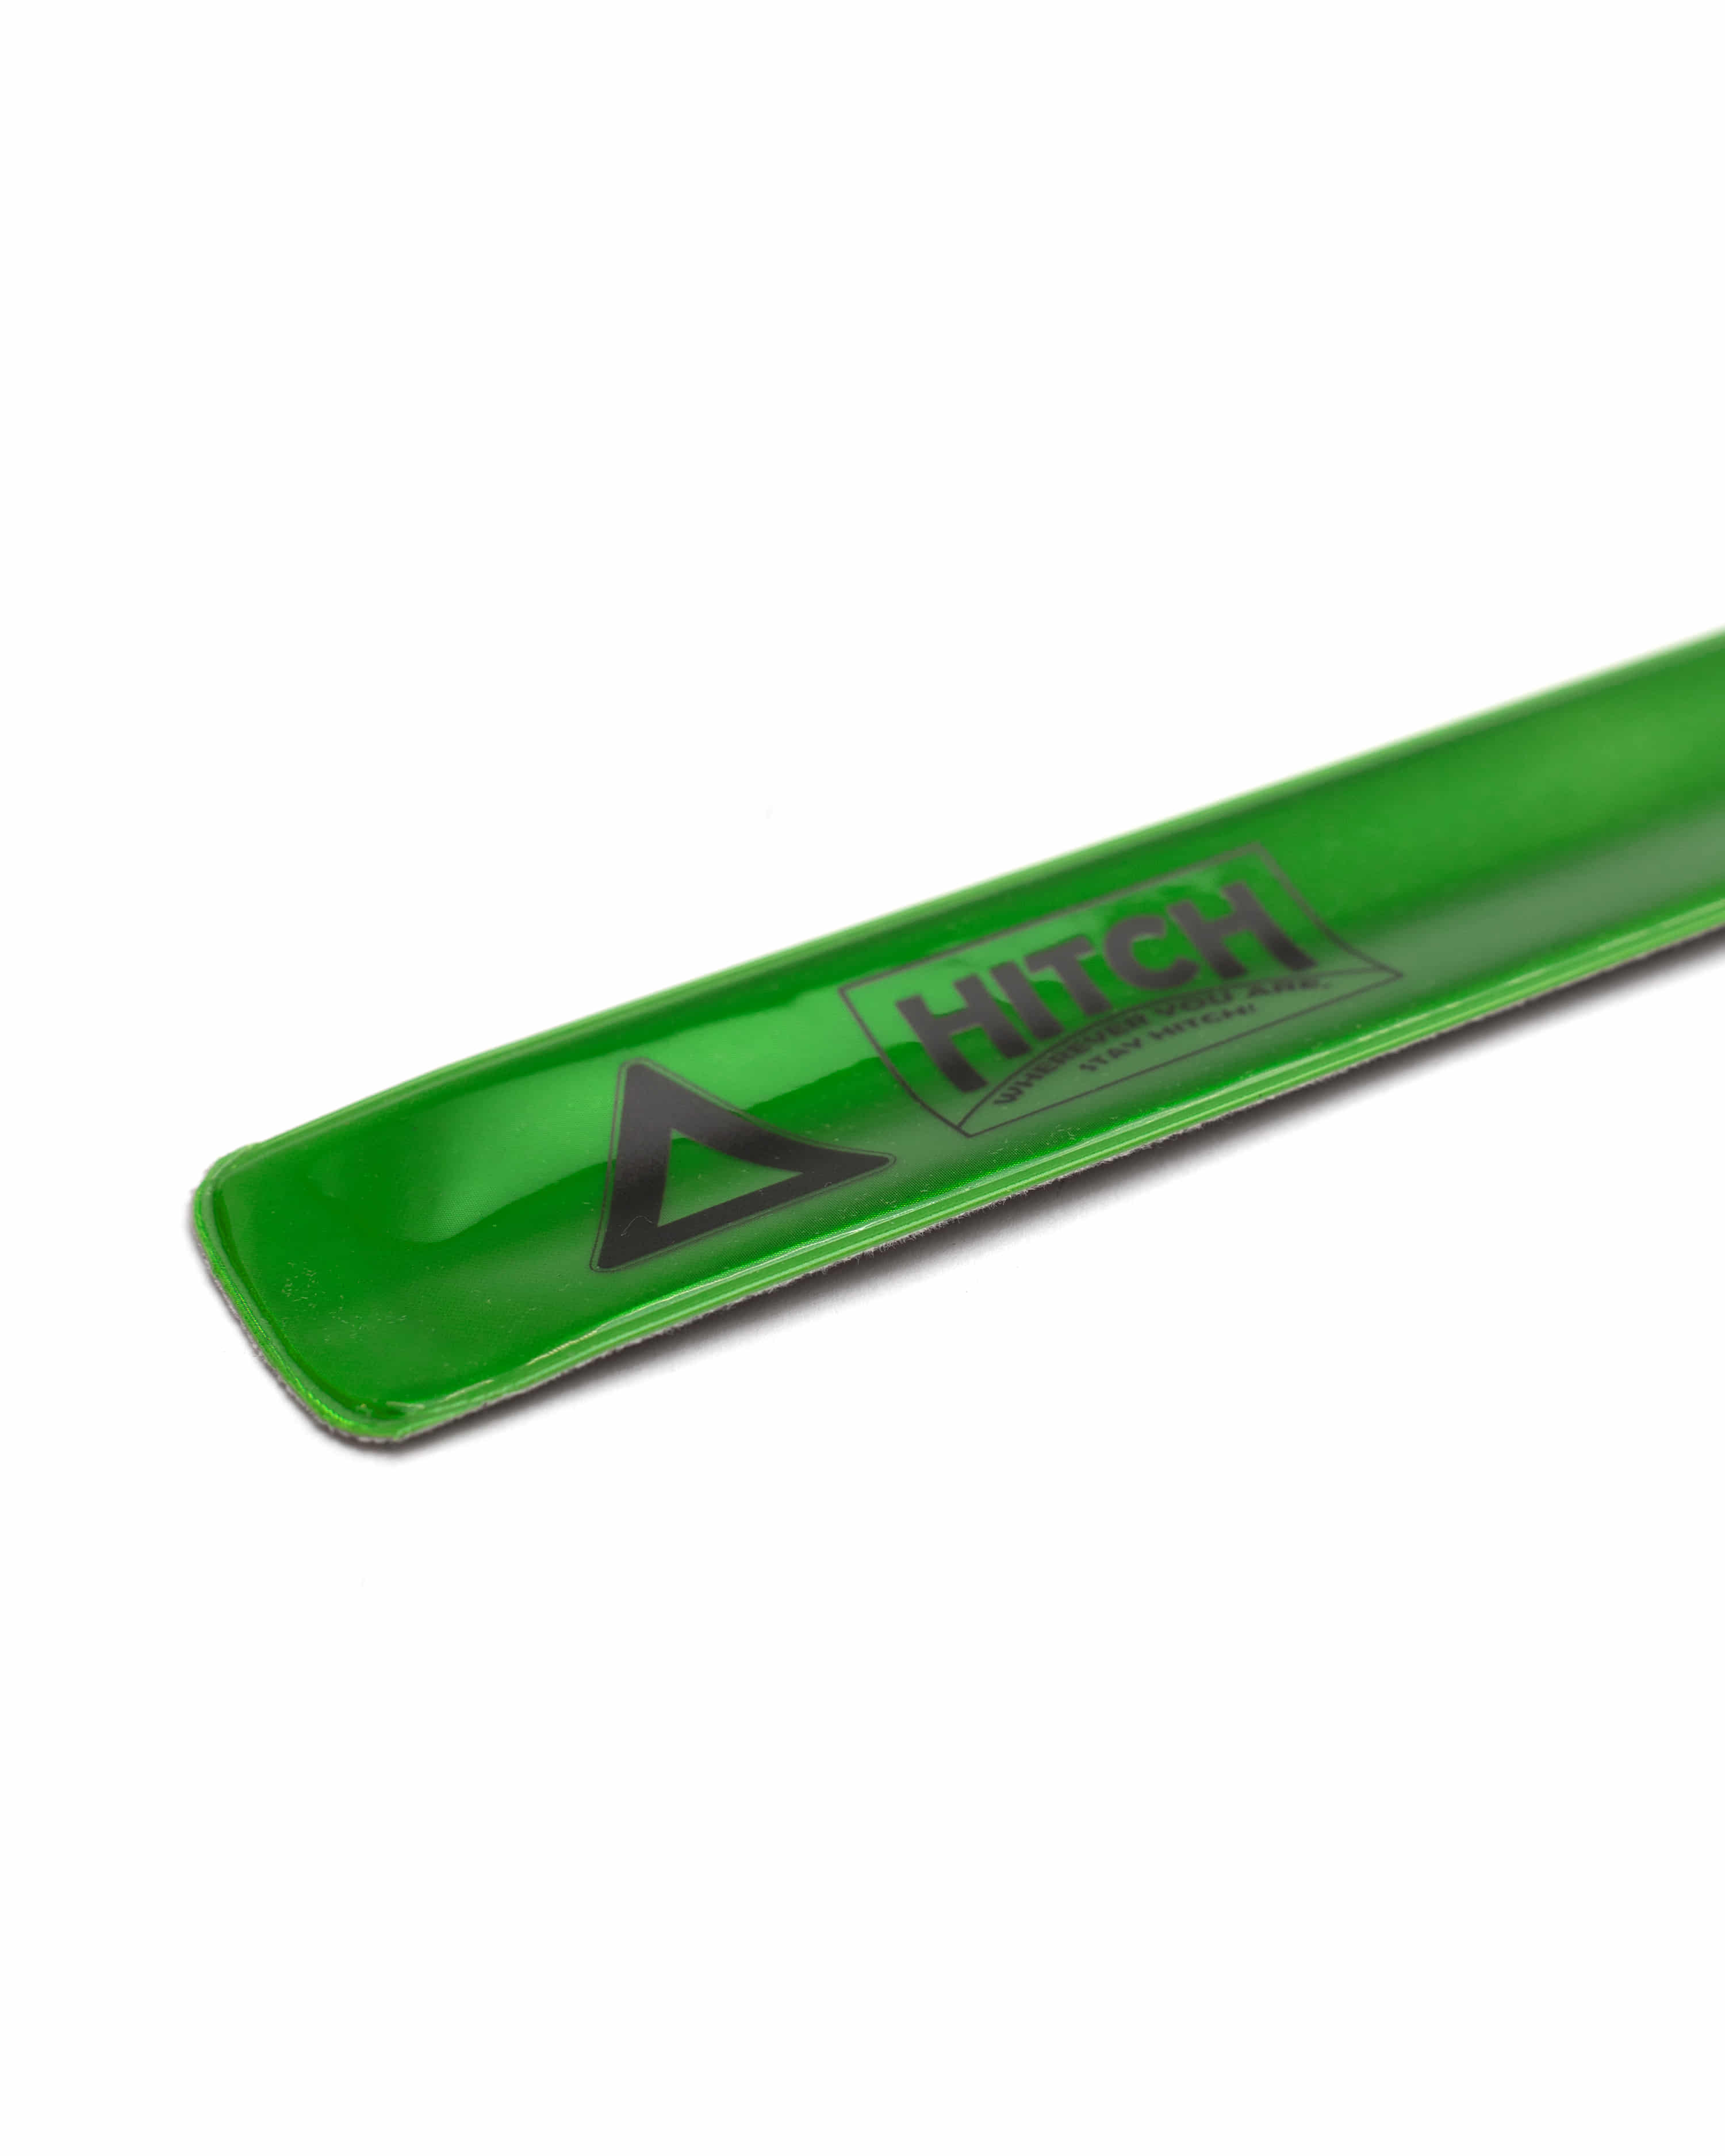 Reflector slapband (Long) - green